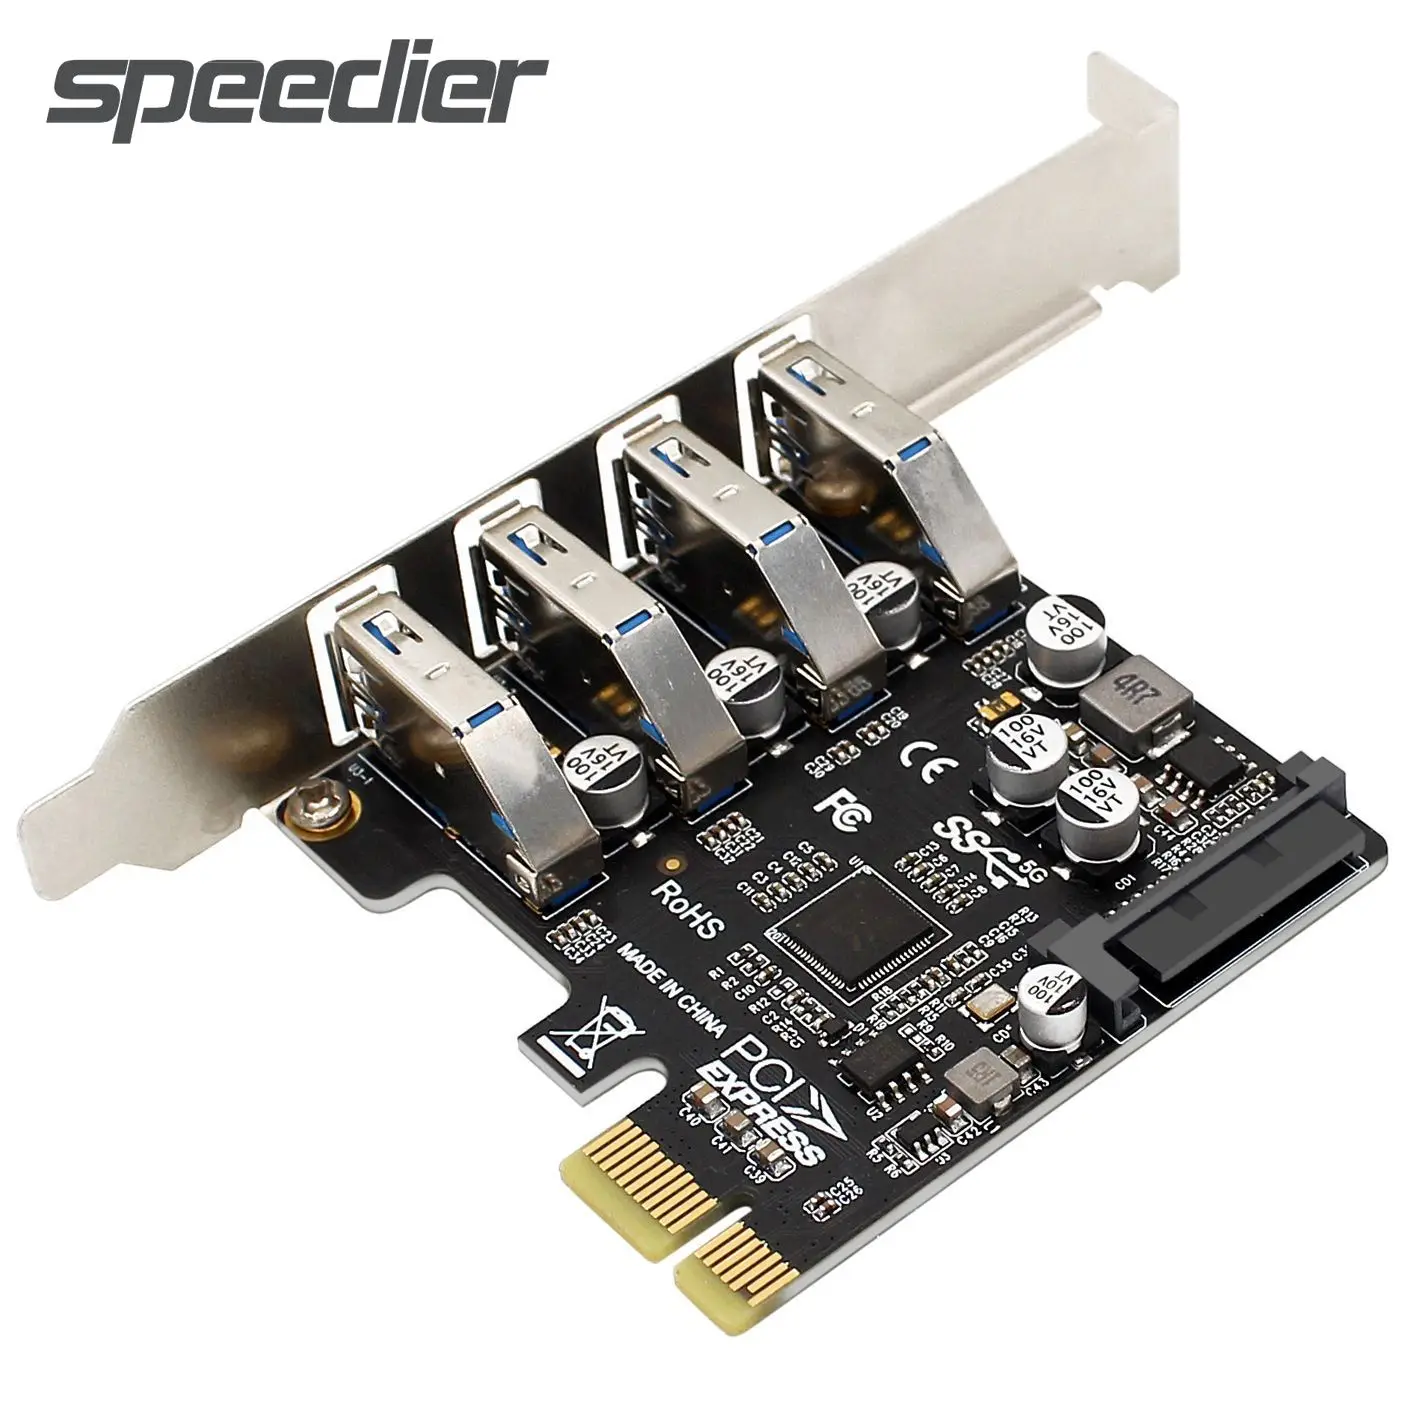 

USB 3.0 PCI-E Adapter 4*Ports USB3.0 Expansion Riser Card PCI E USB 3.0 Adapter Converter For PCIE x1 x4 x8 x16 VL805 2U/4U Case